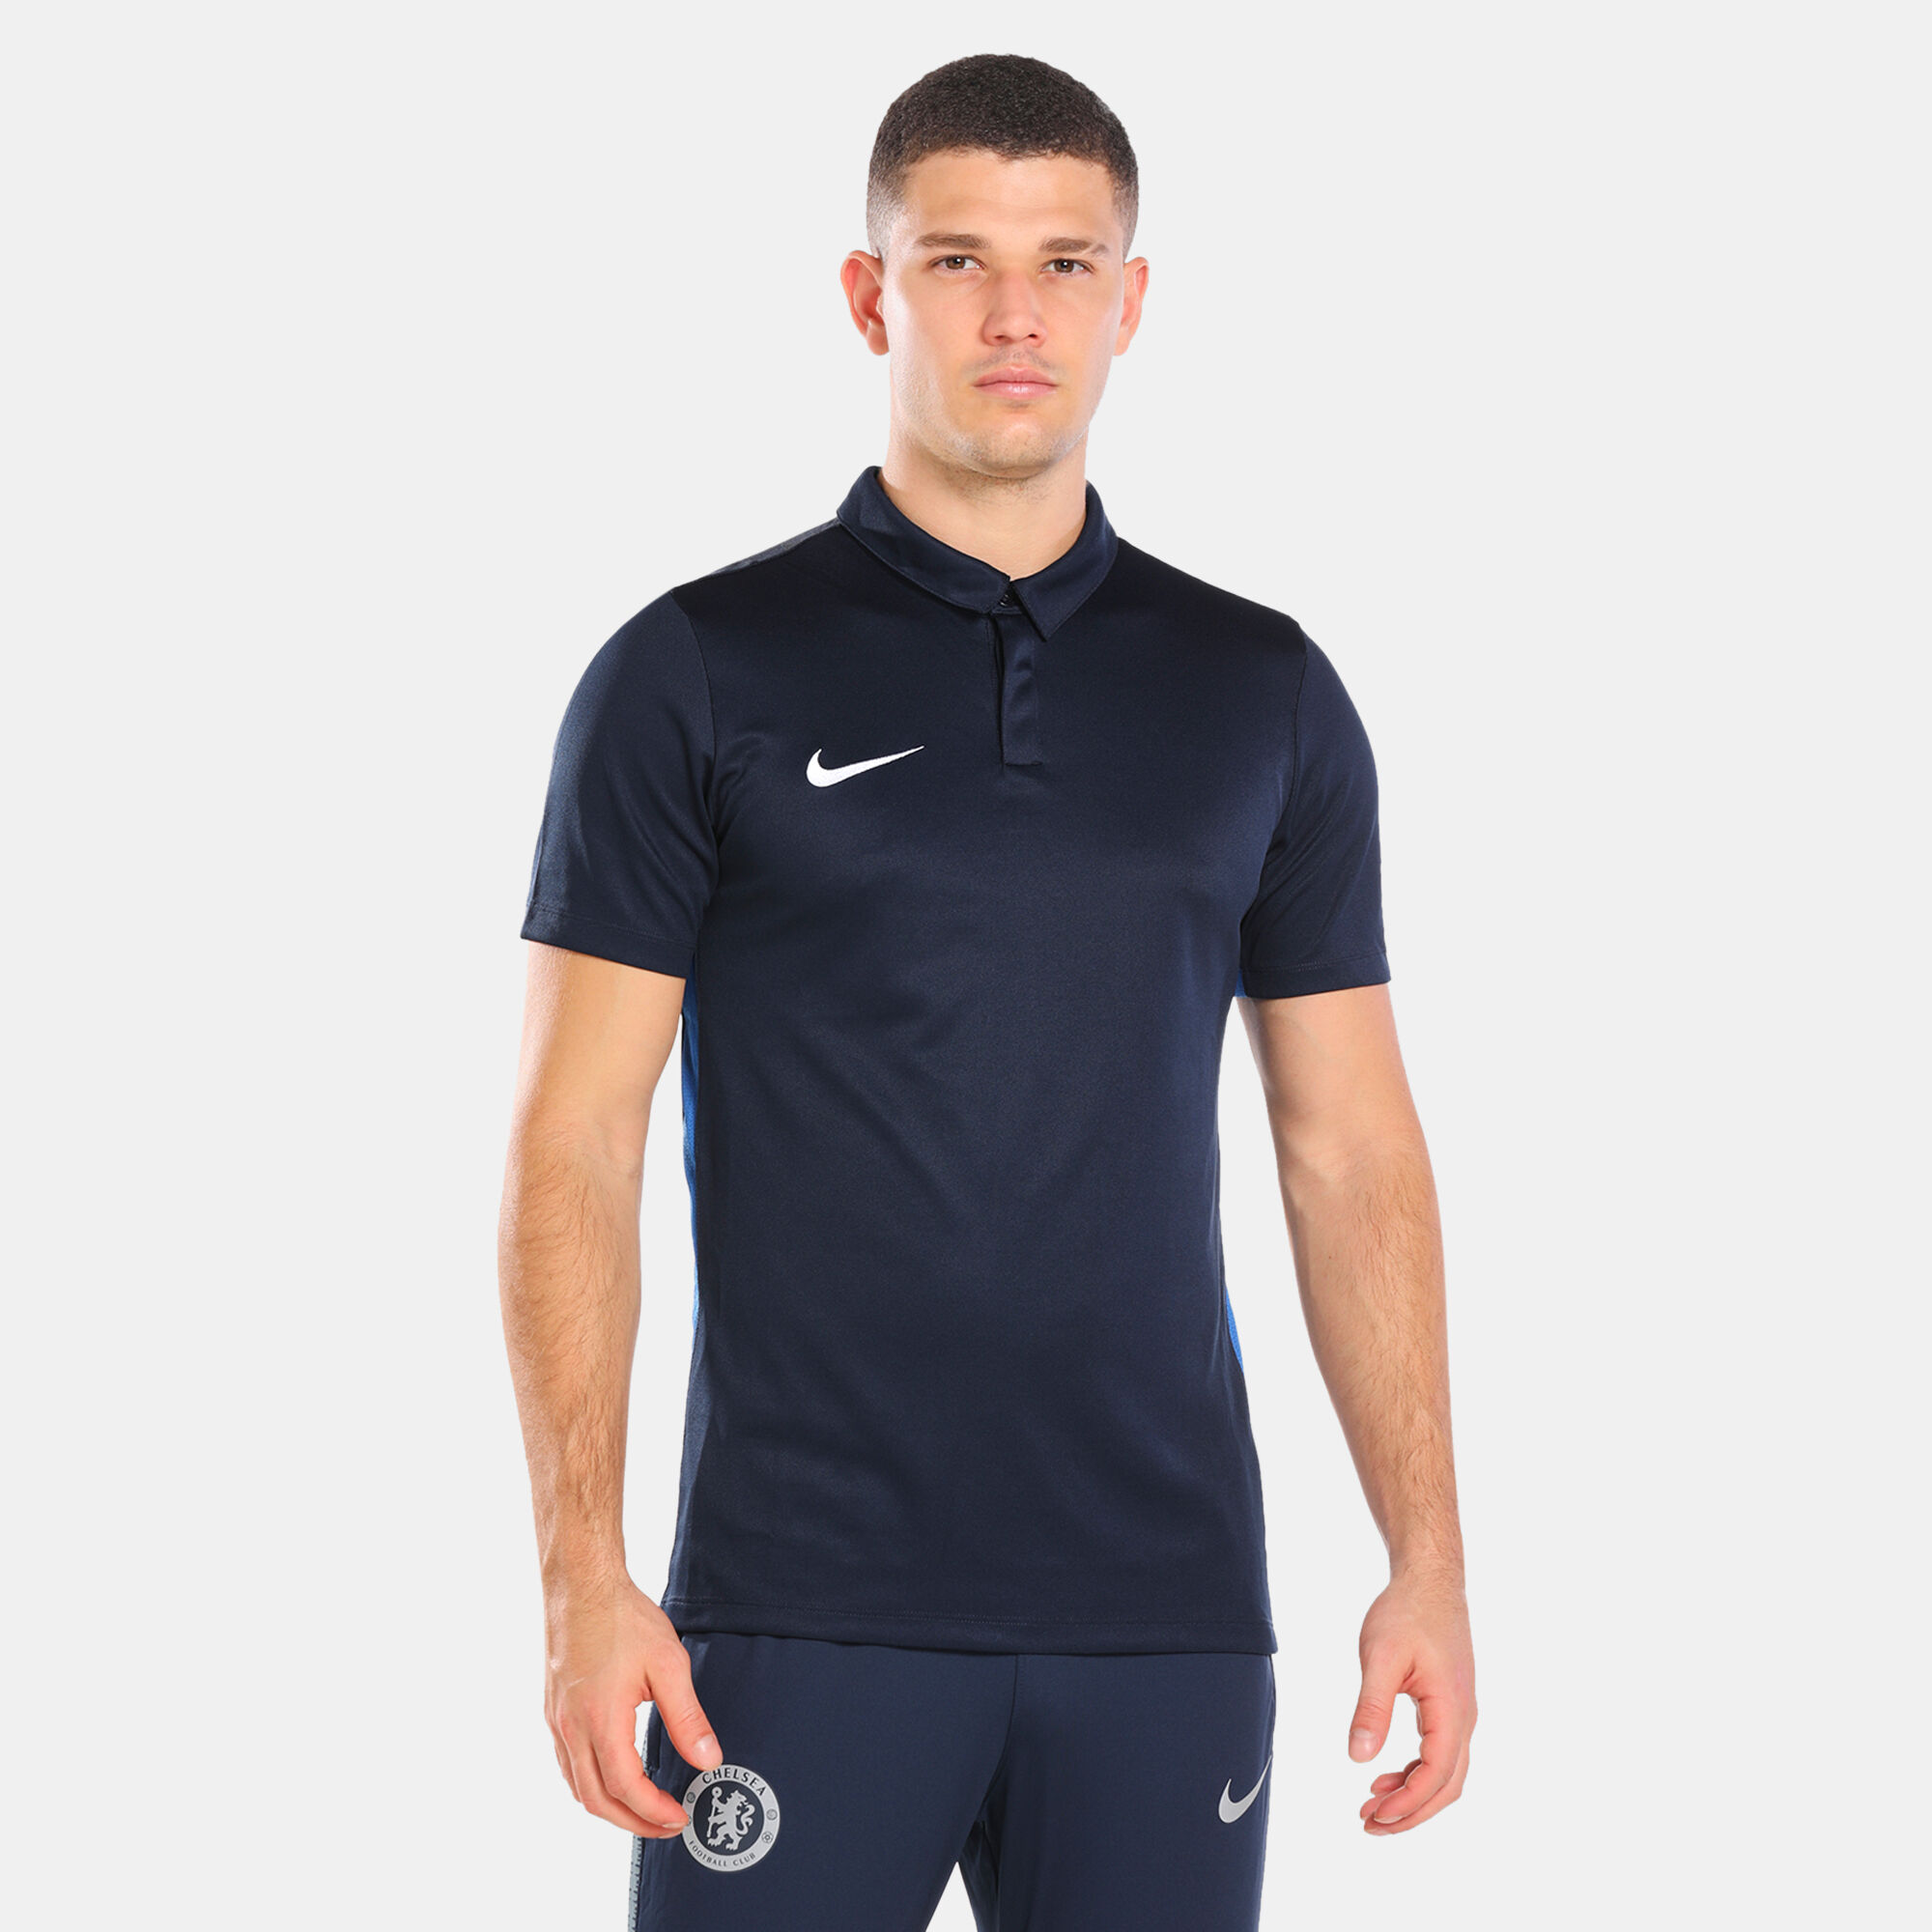 Nike Men's Dry Polo Shirt